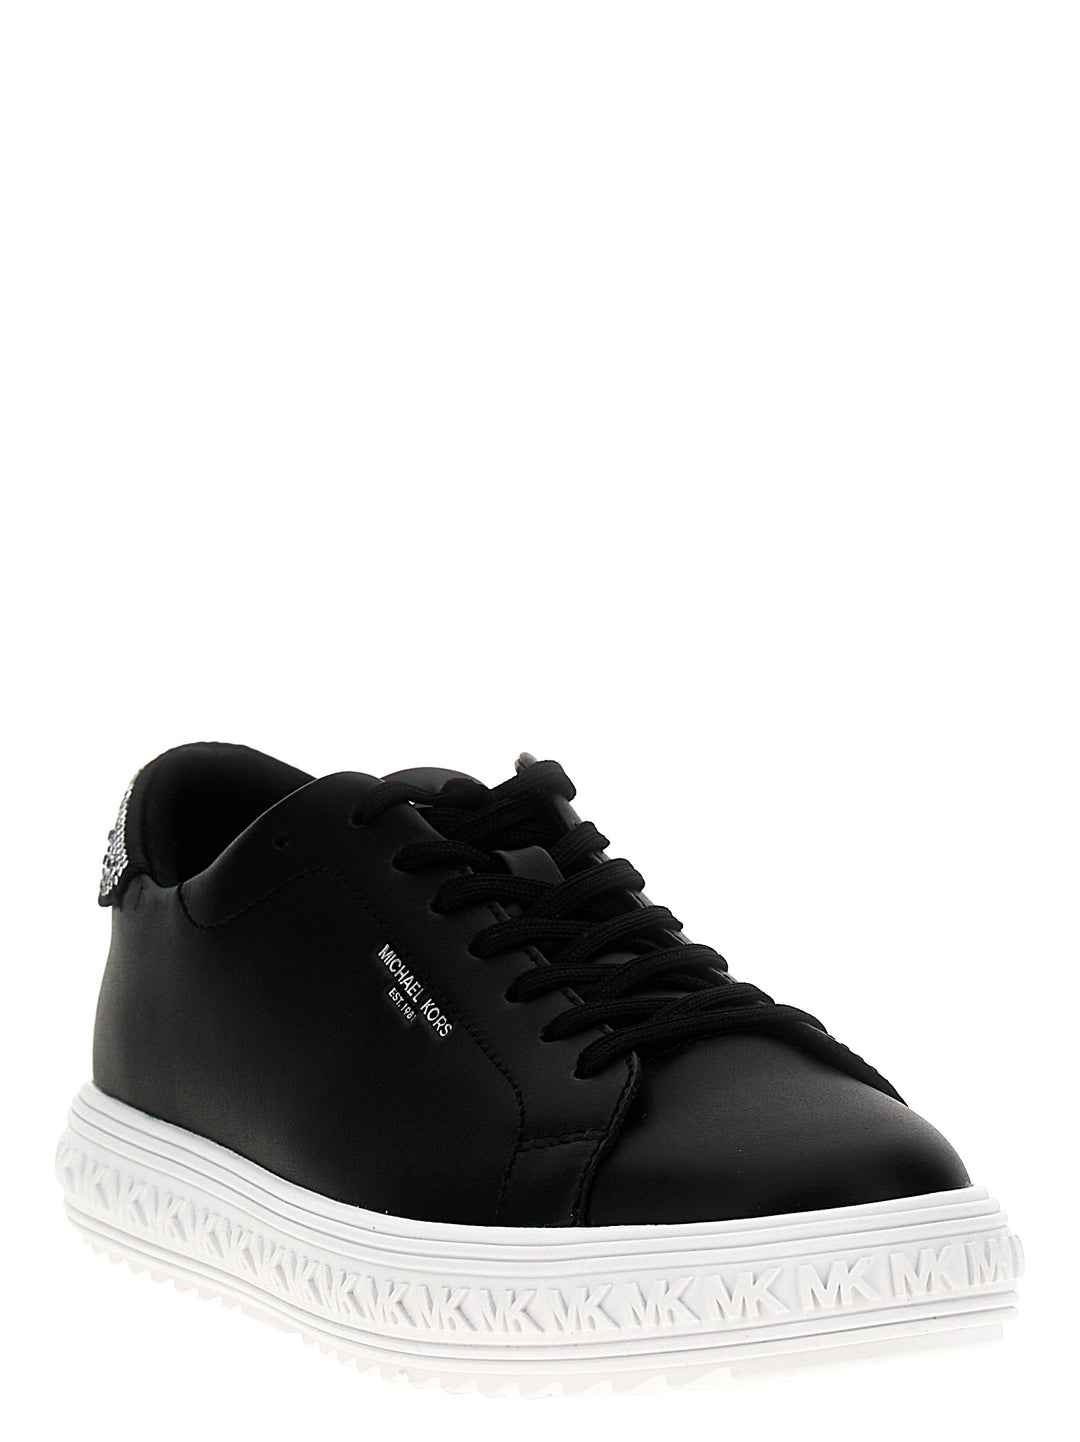 Grive Sneakers Bianco/Nero